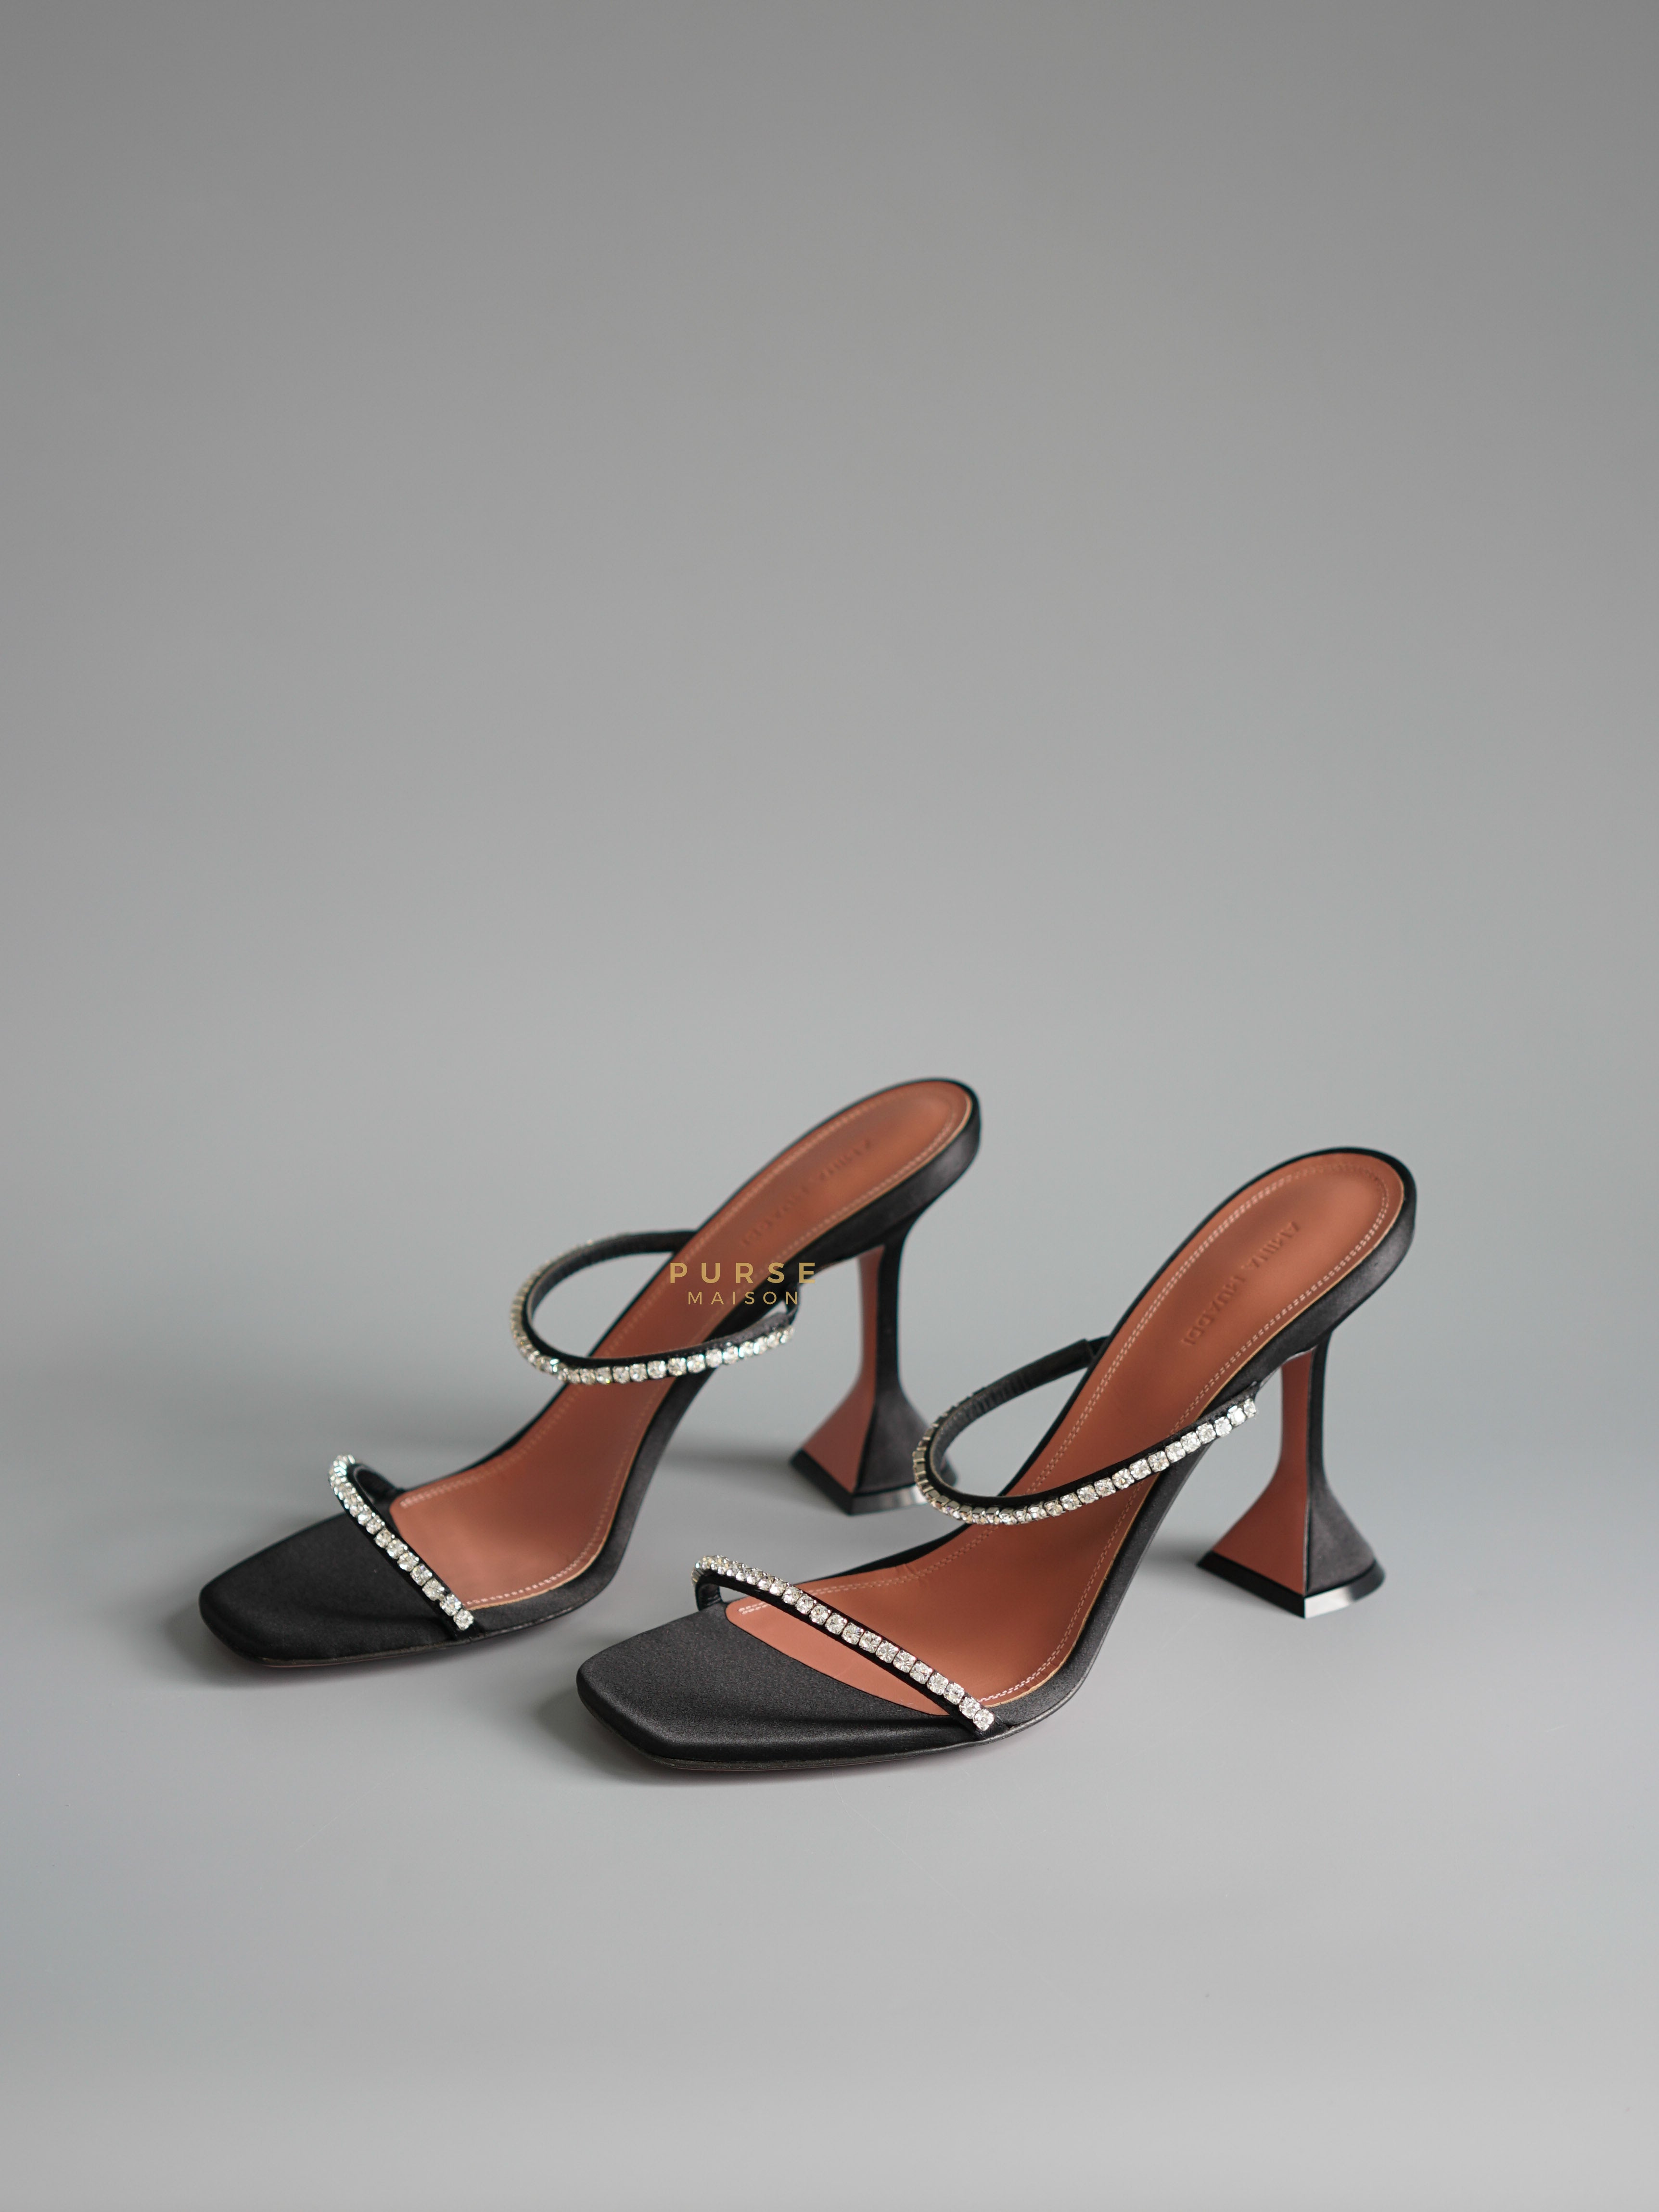 Amina Muaddi Gilda Slipper 95mm Heels Satin Black Size 41 (26.5cm) | Purse Maison Luxury Bags Shop